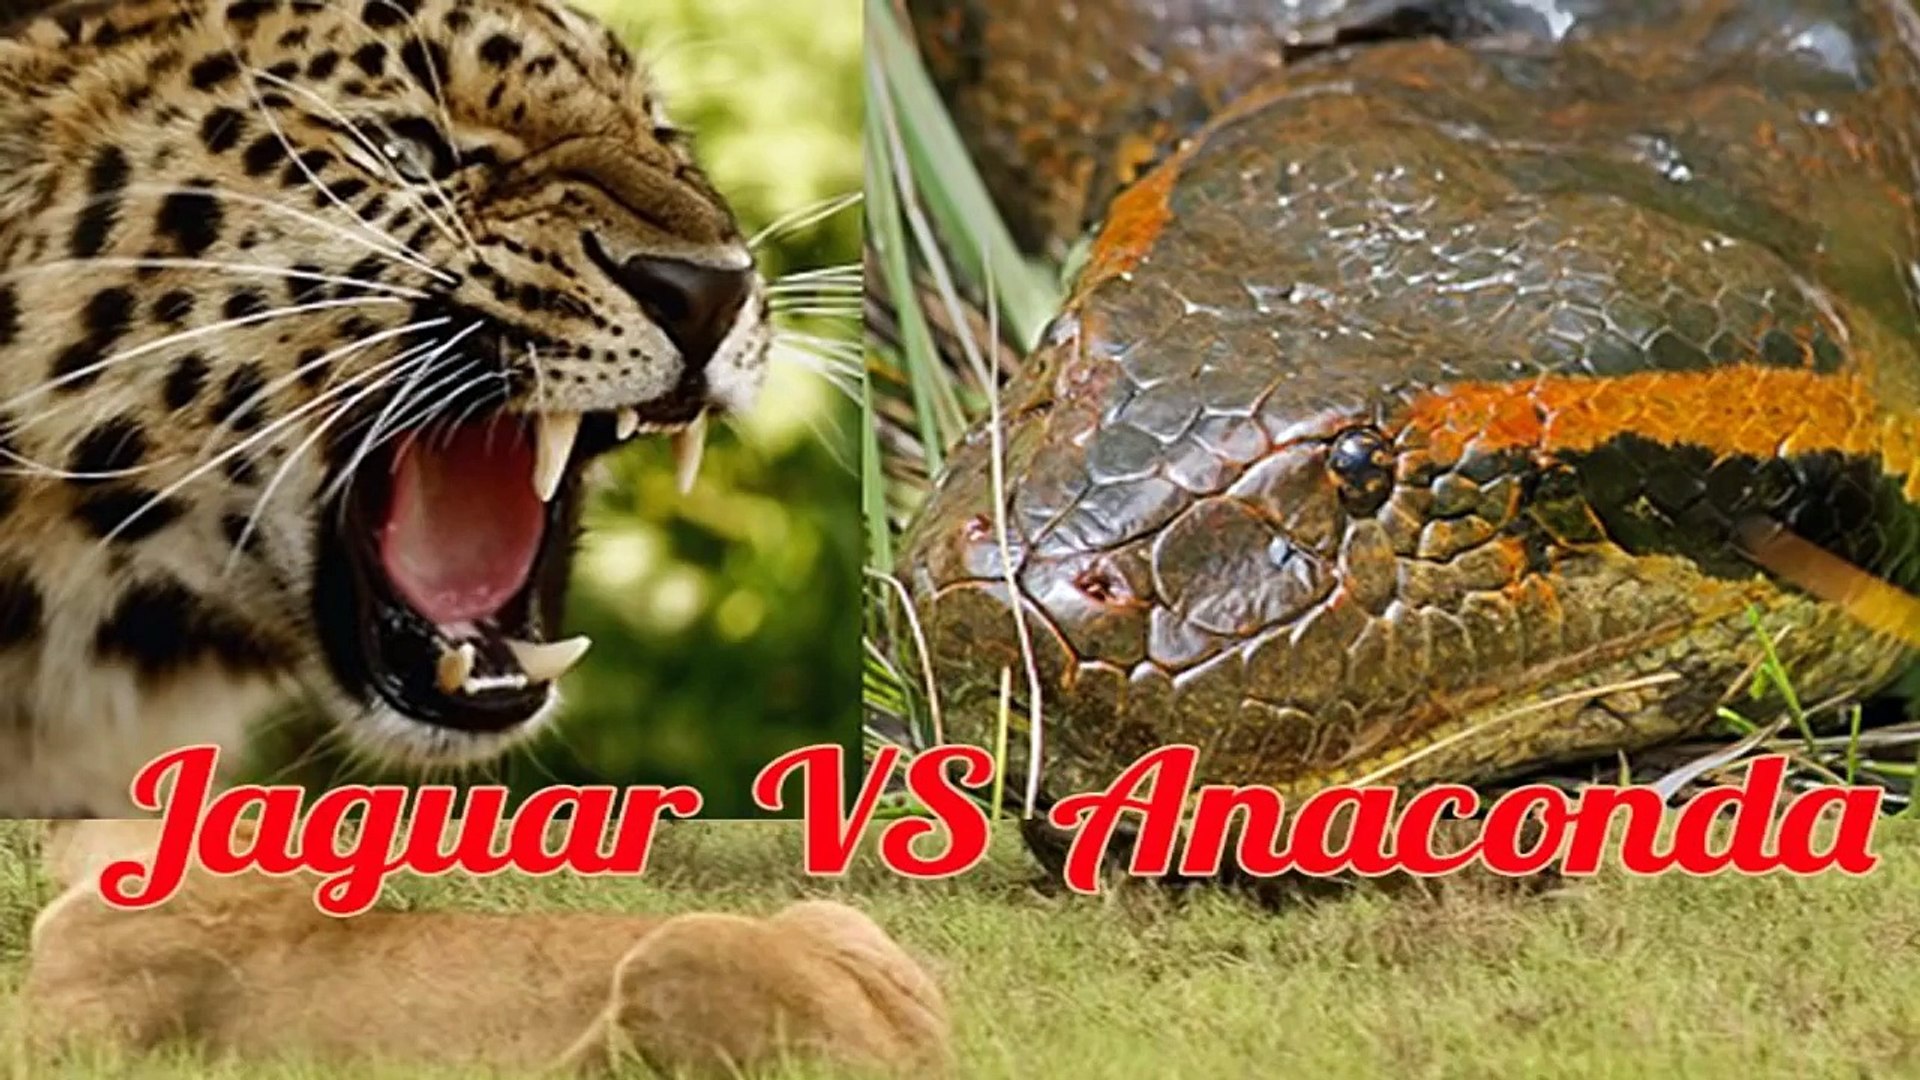 JAGUAR vs ANACONDA (No Mercy Fight) Animal vs Animal [HD] - Dailymotion  Video